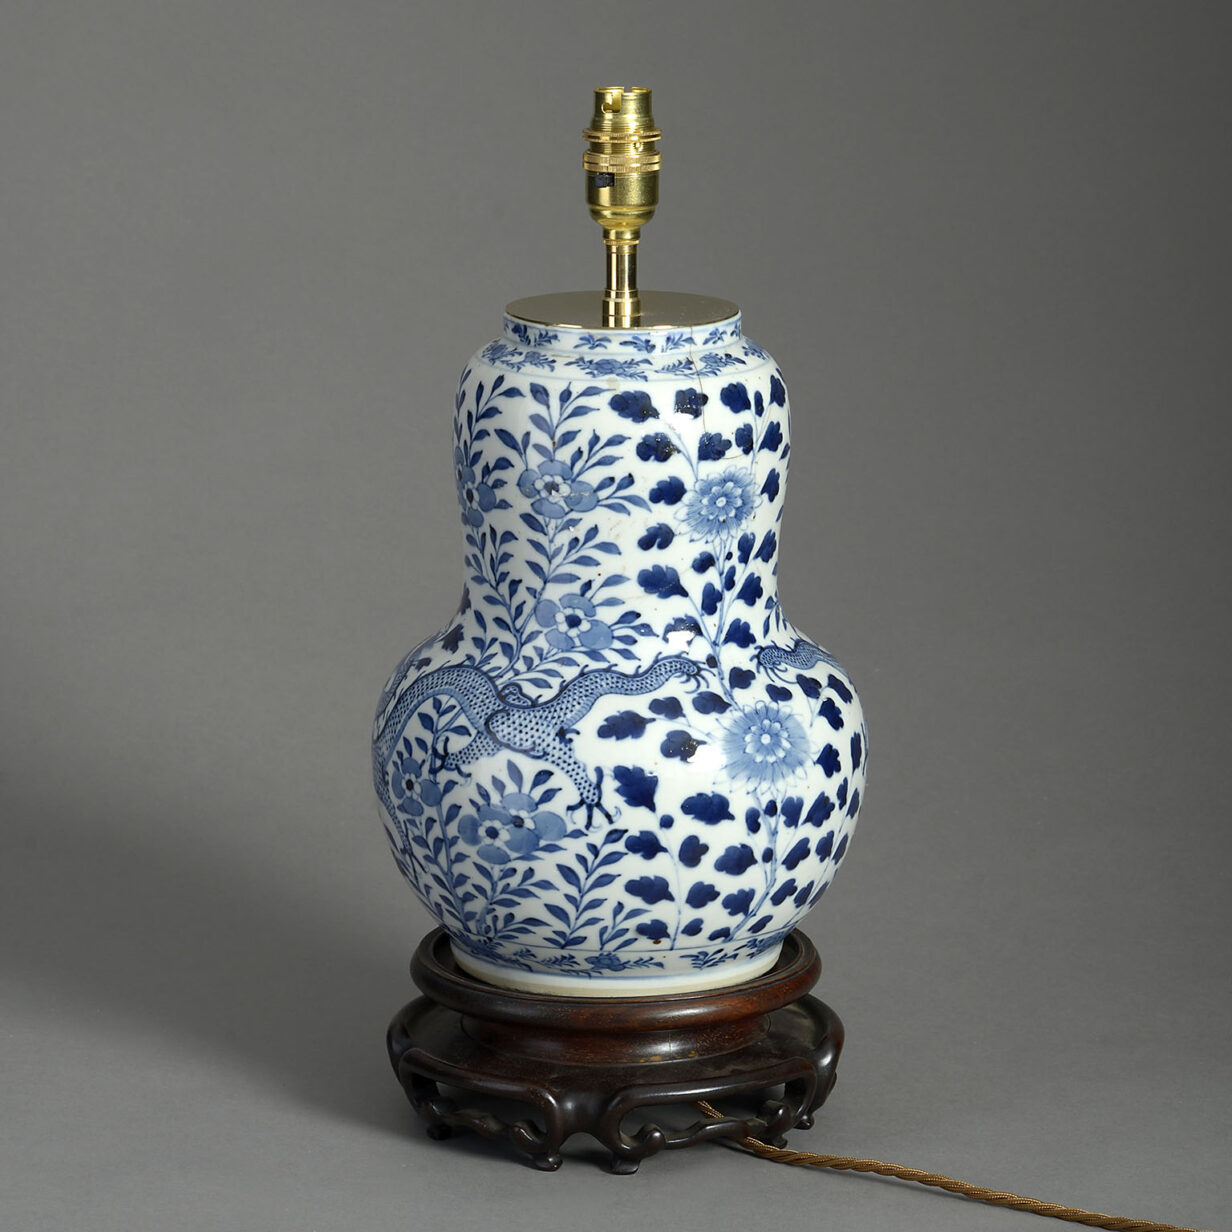 Blue and white dragon vase lamp